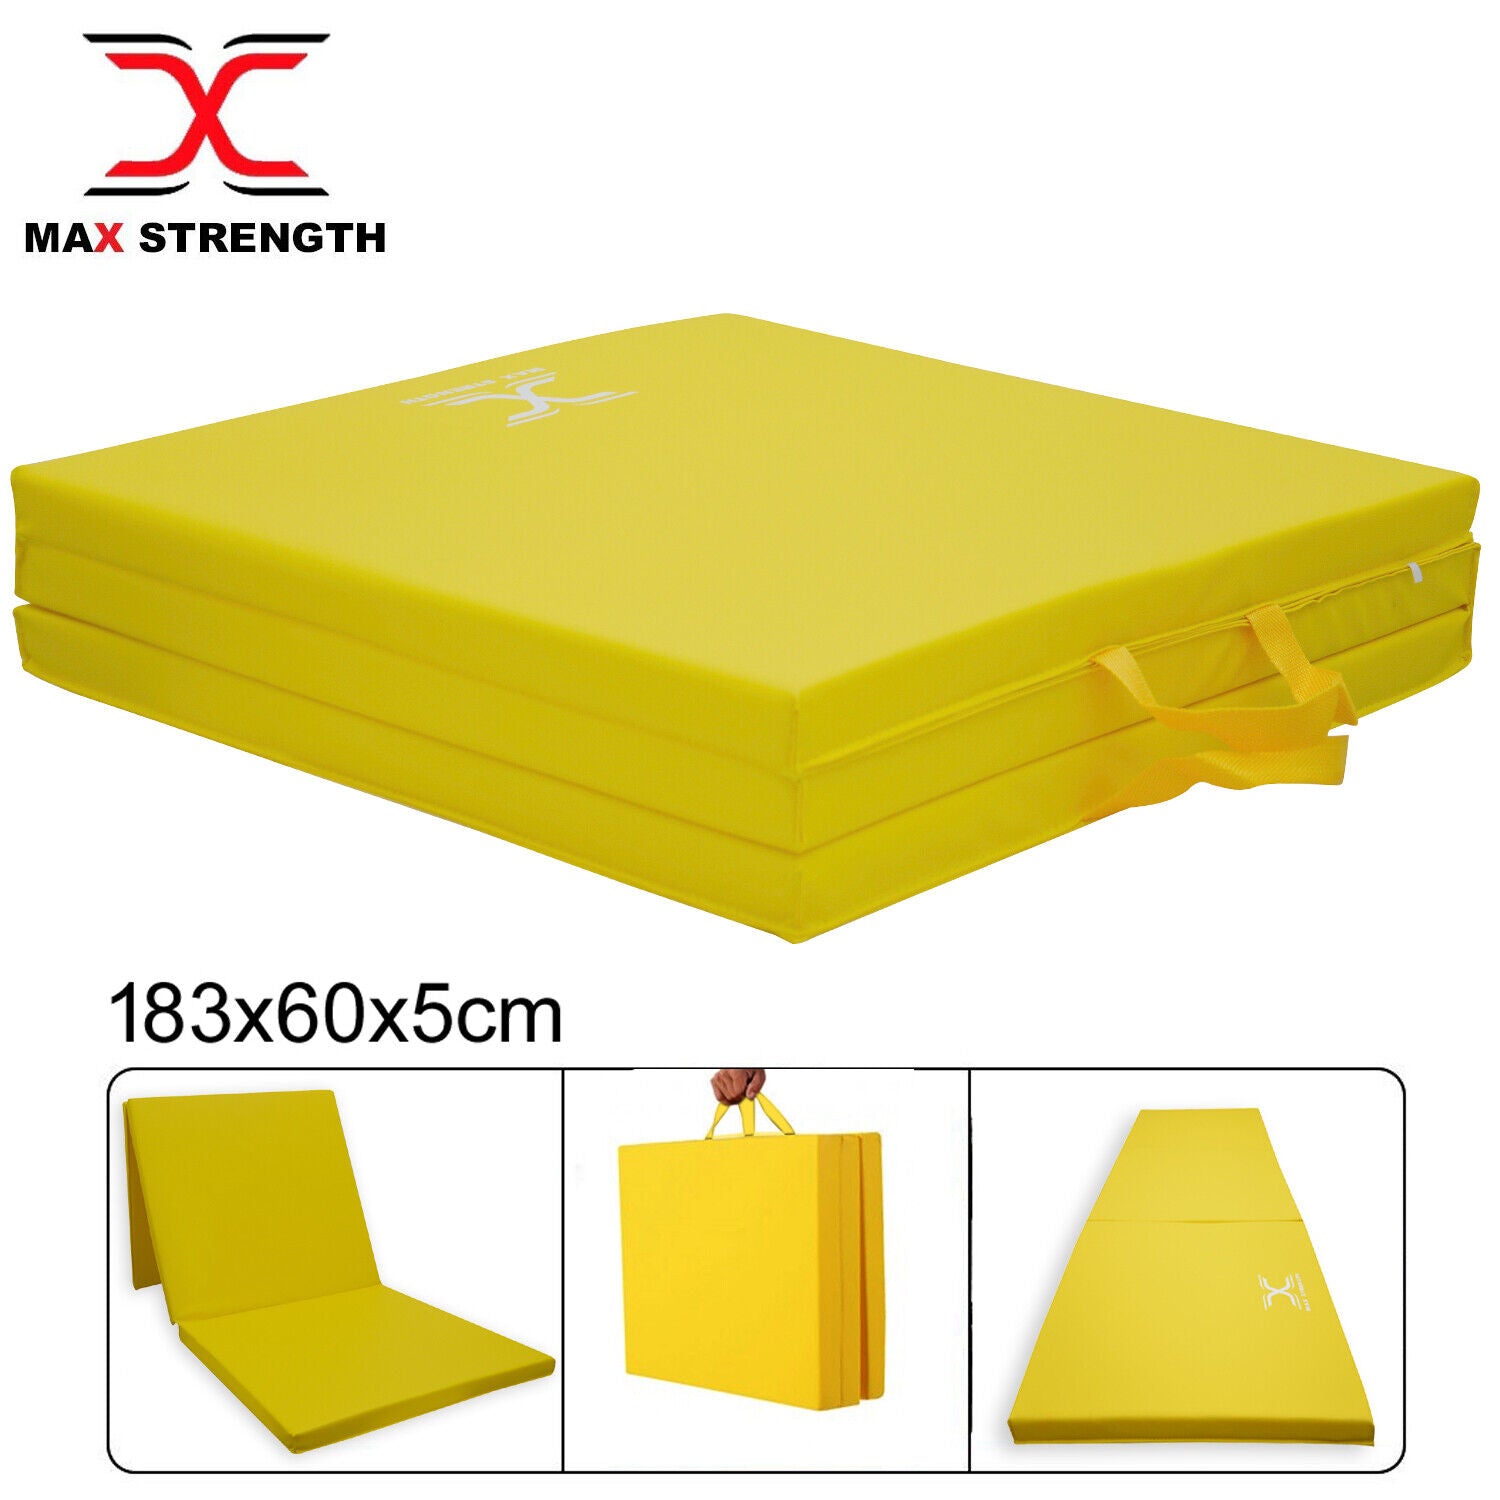 tri folding mat Yellow 